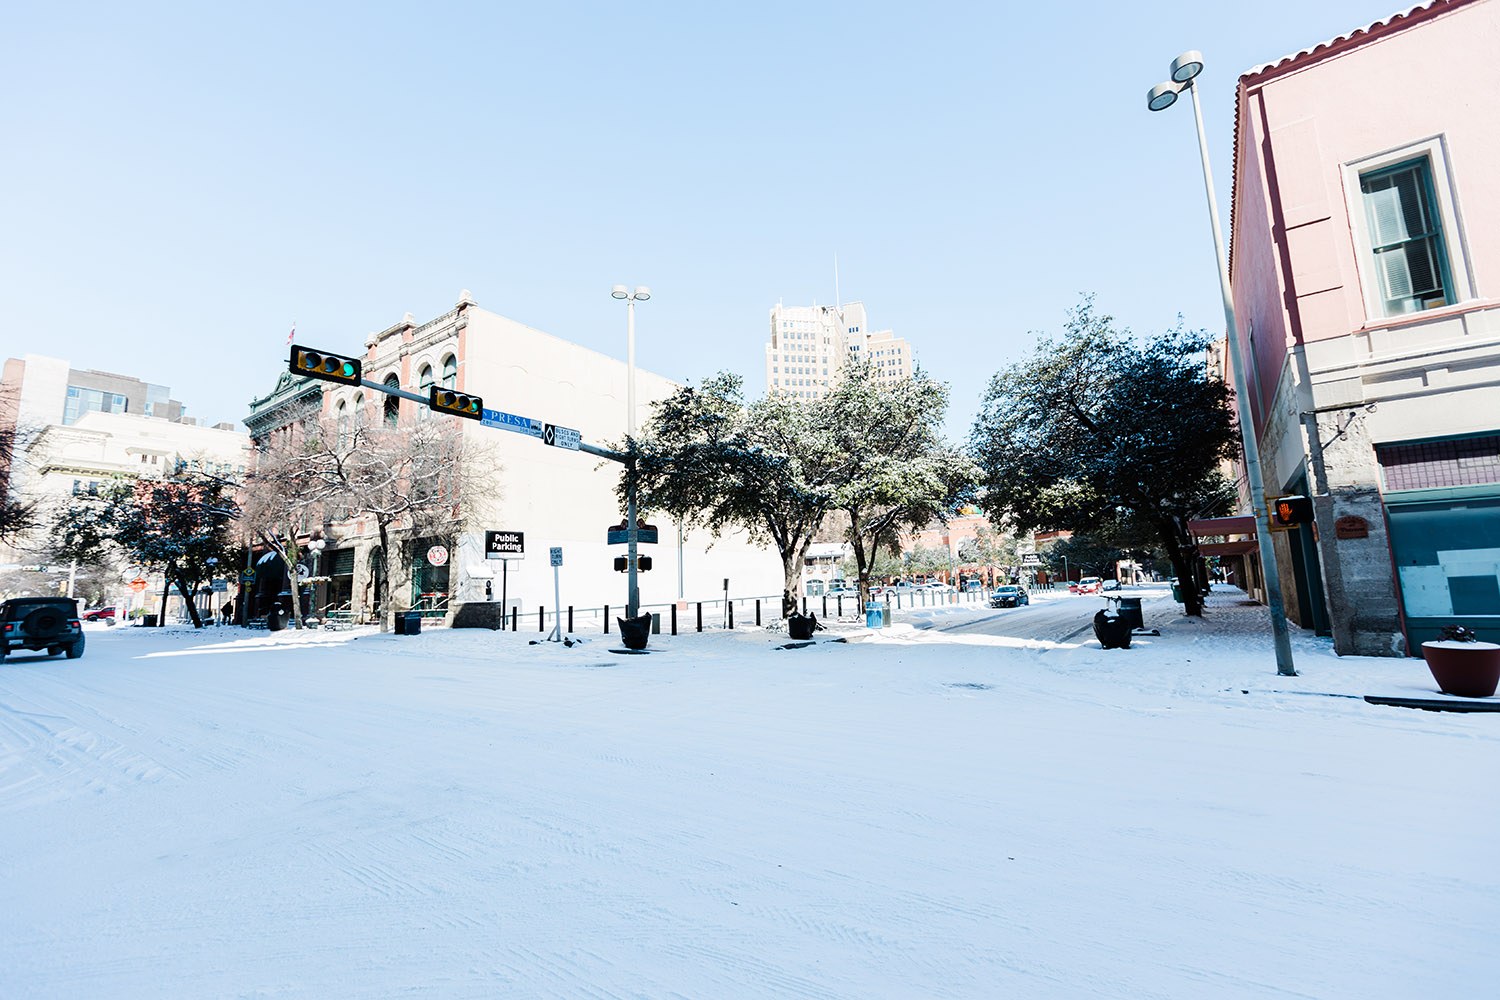 Snow day in San Antonio, Monday, Feb. 15, 2021. <em>Photo by Isaiah Alonzo</em>